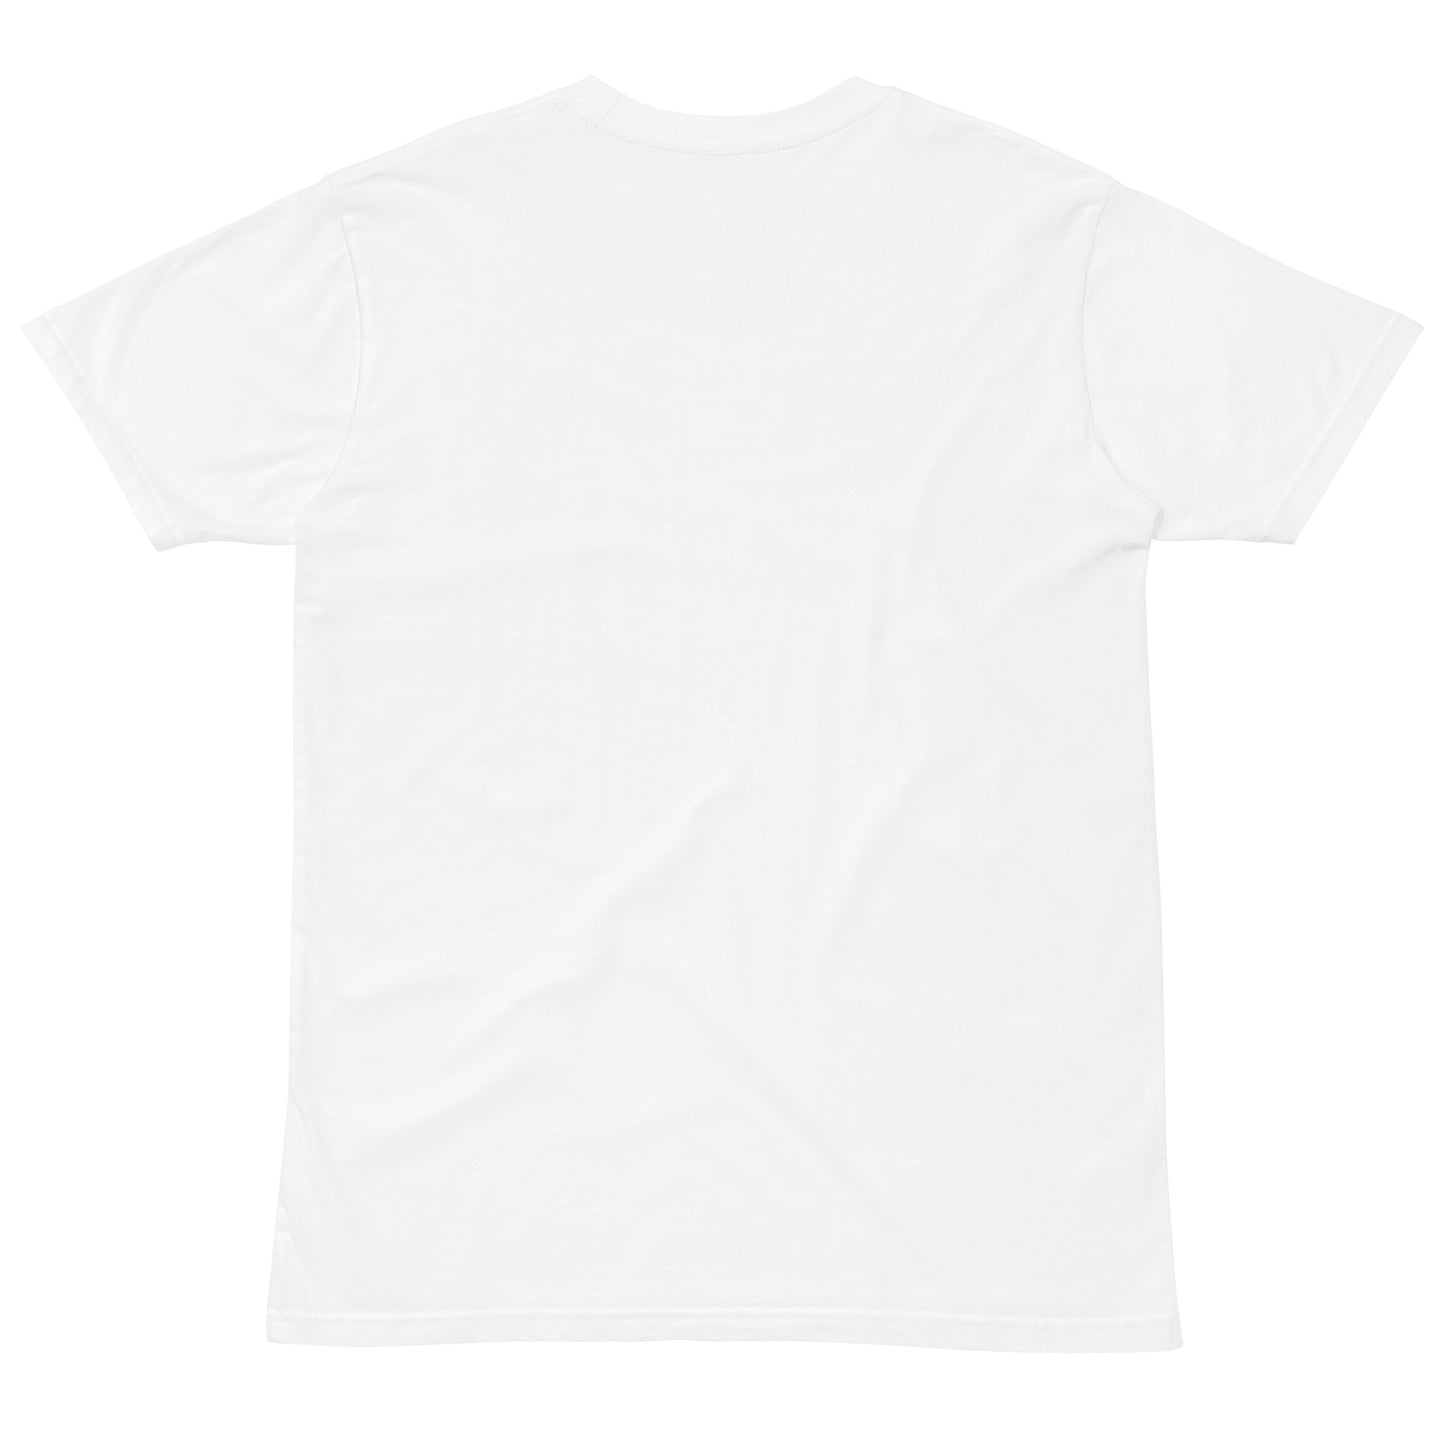 Unisex premium t-shirt - The Coastal Vibe